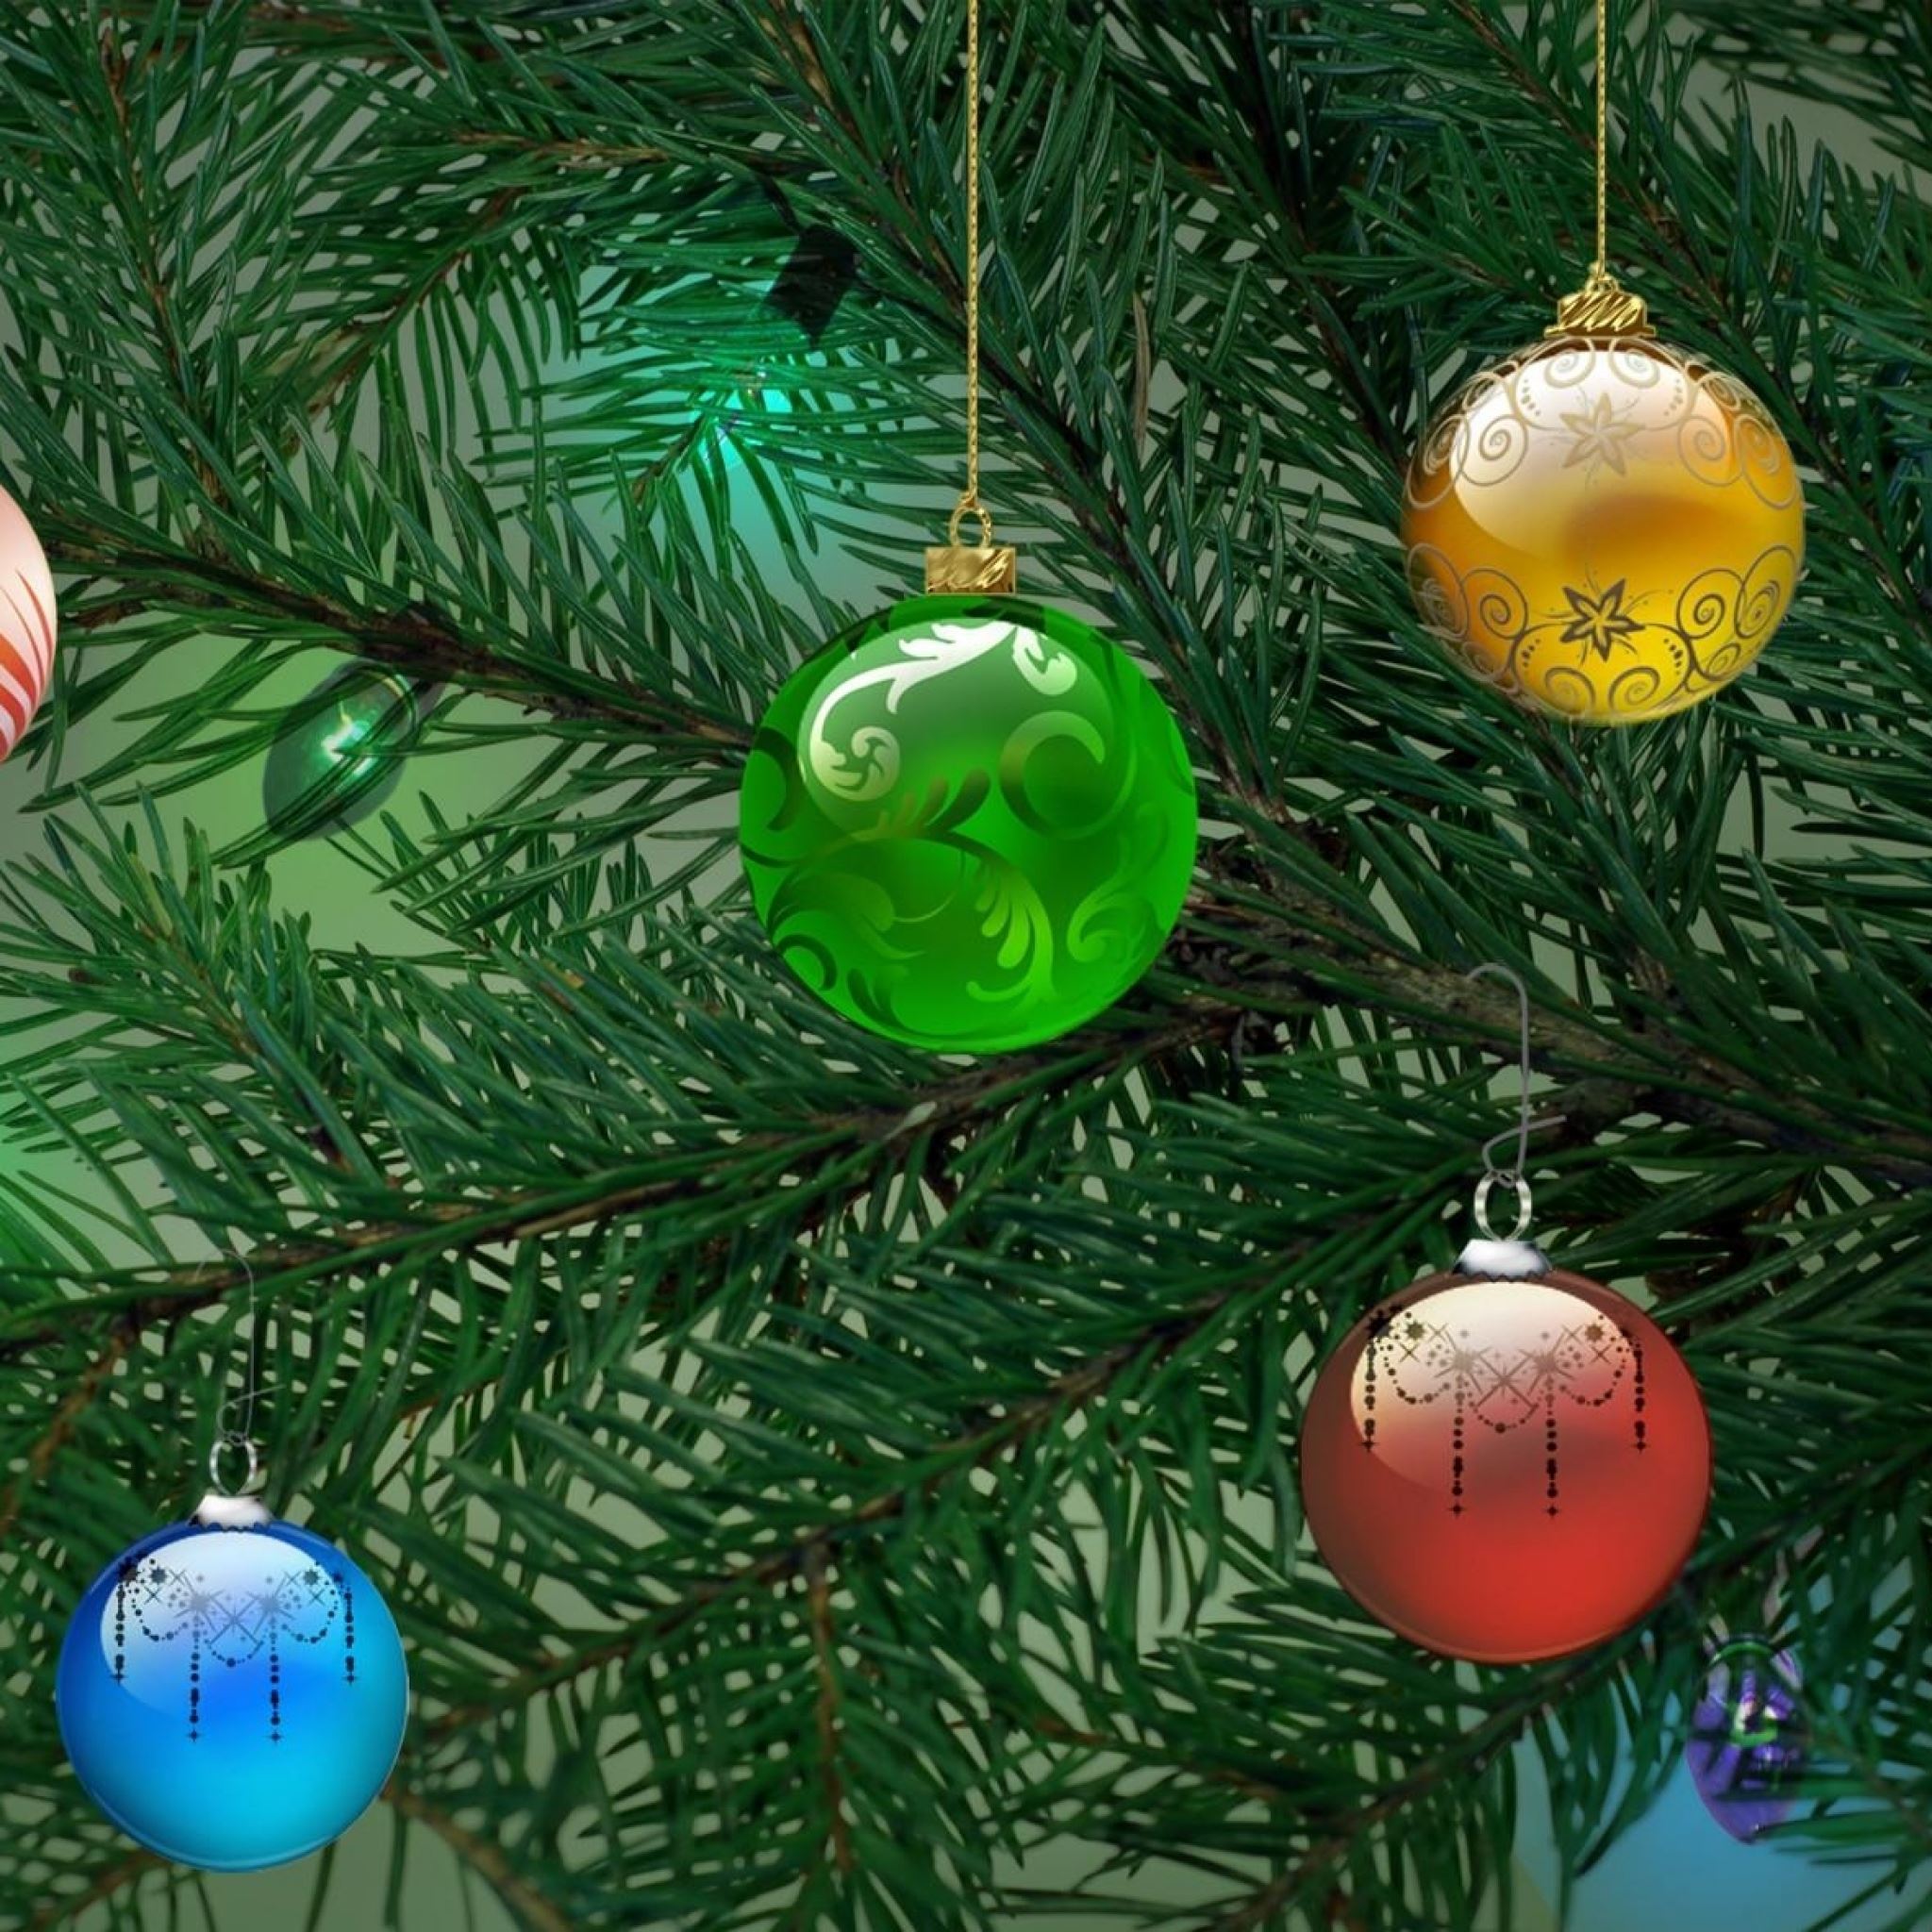 Tree christmas decorations iPad Air Wallpaper Free Download